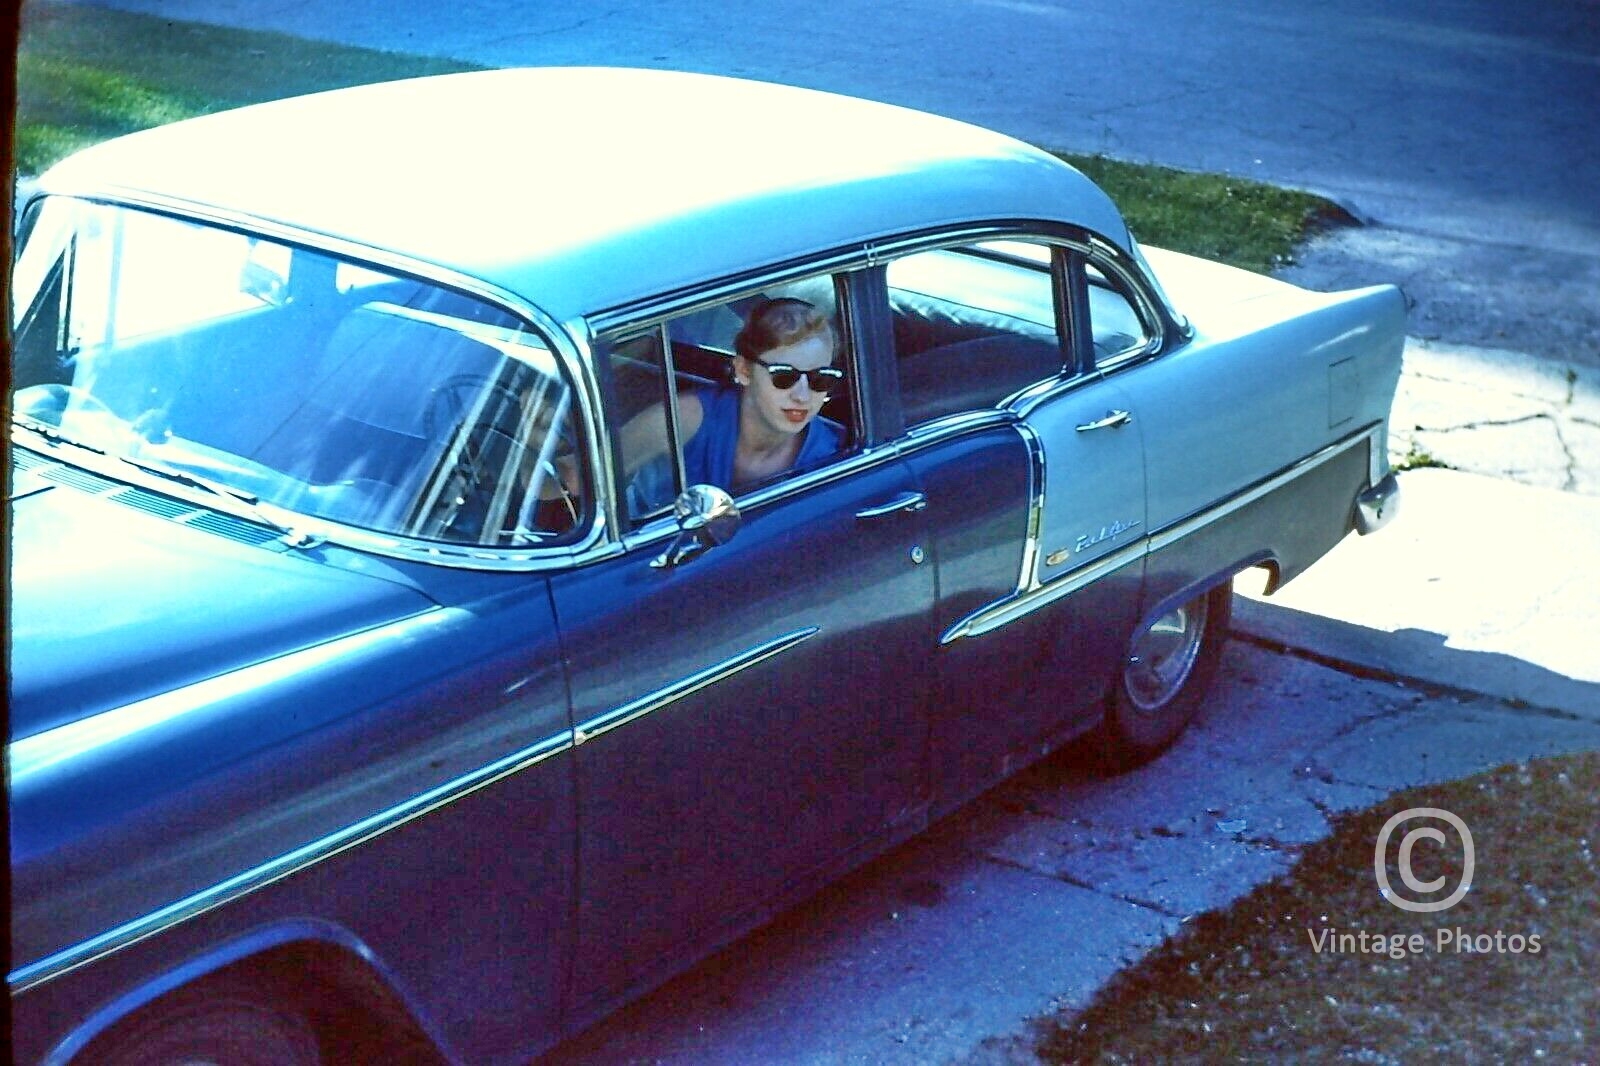 1950s American Classic Bel Air Blue Car plus woman driver